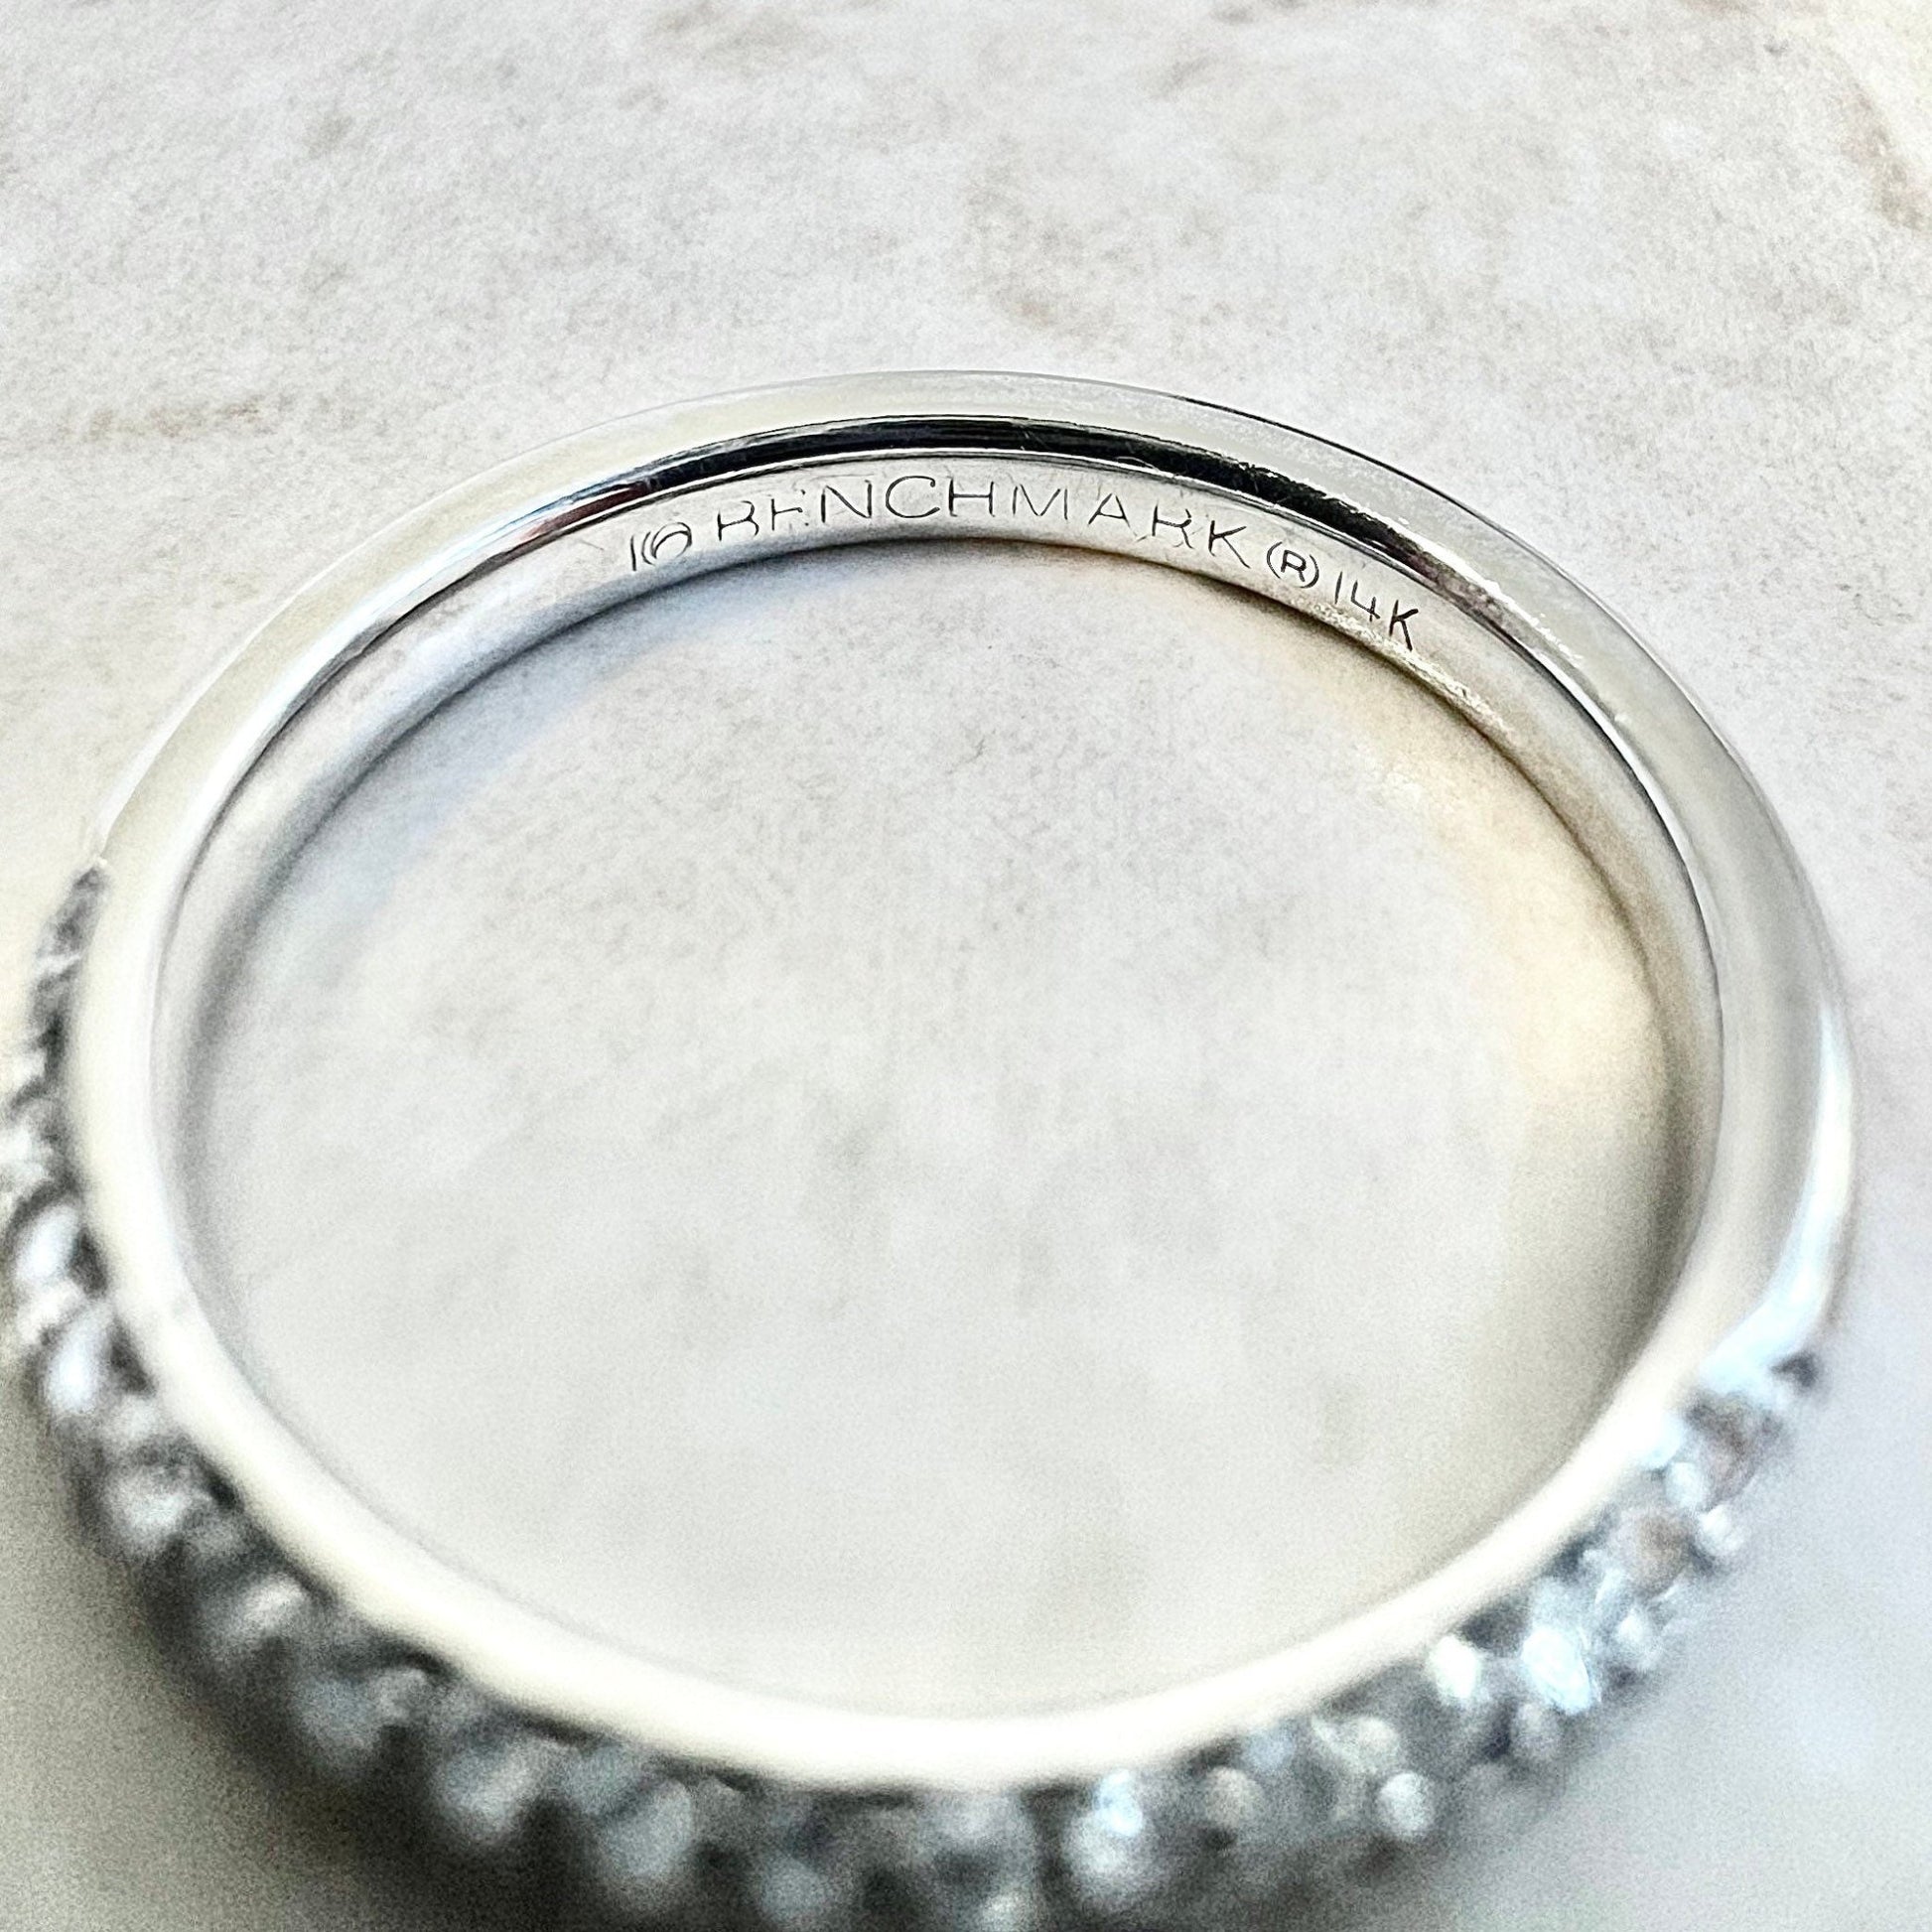 14K 3 Row Pave Diamond Wedding Band Ring - 14K White Gold Triple Row Half Eternity Ring For Women - Birthday Gift For Her - Bridal Rings